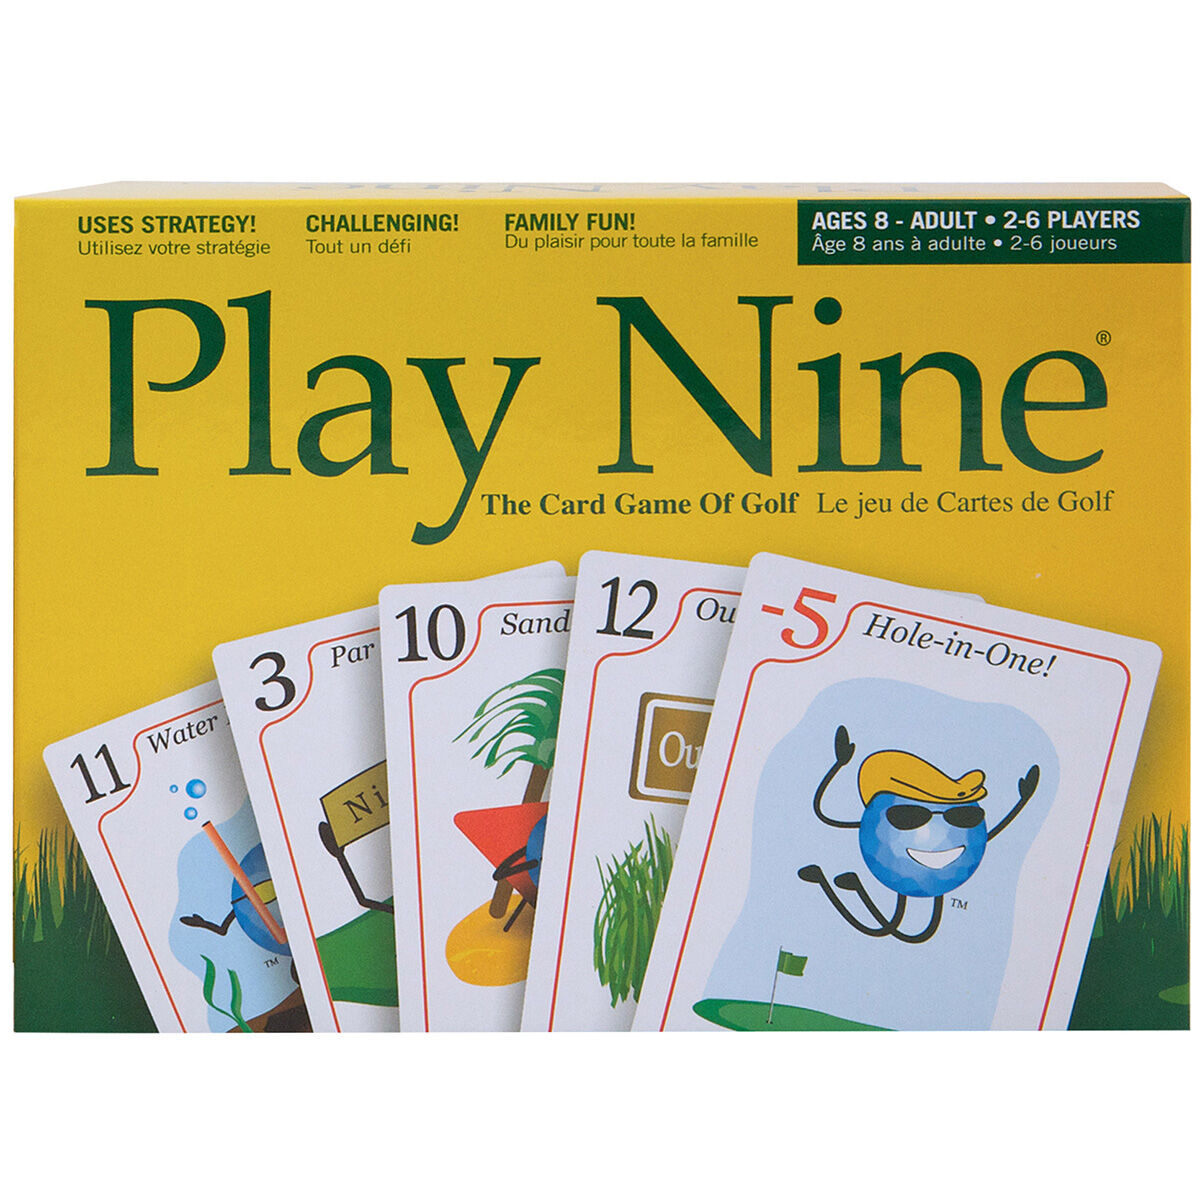 play nine card game strategy